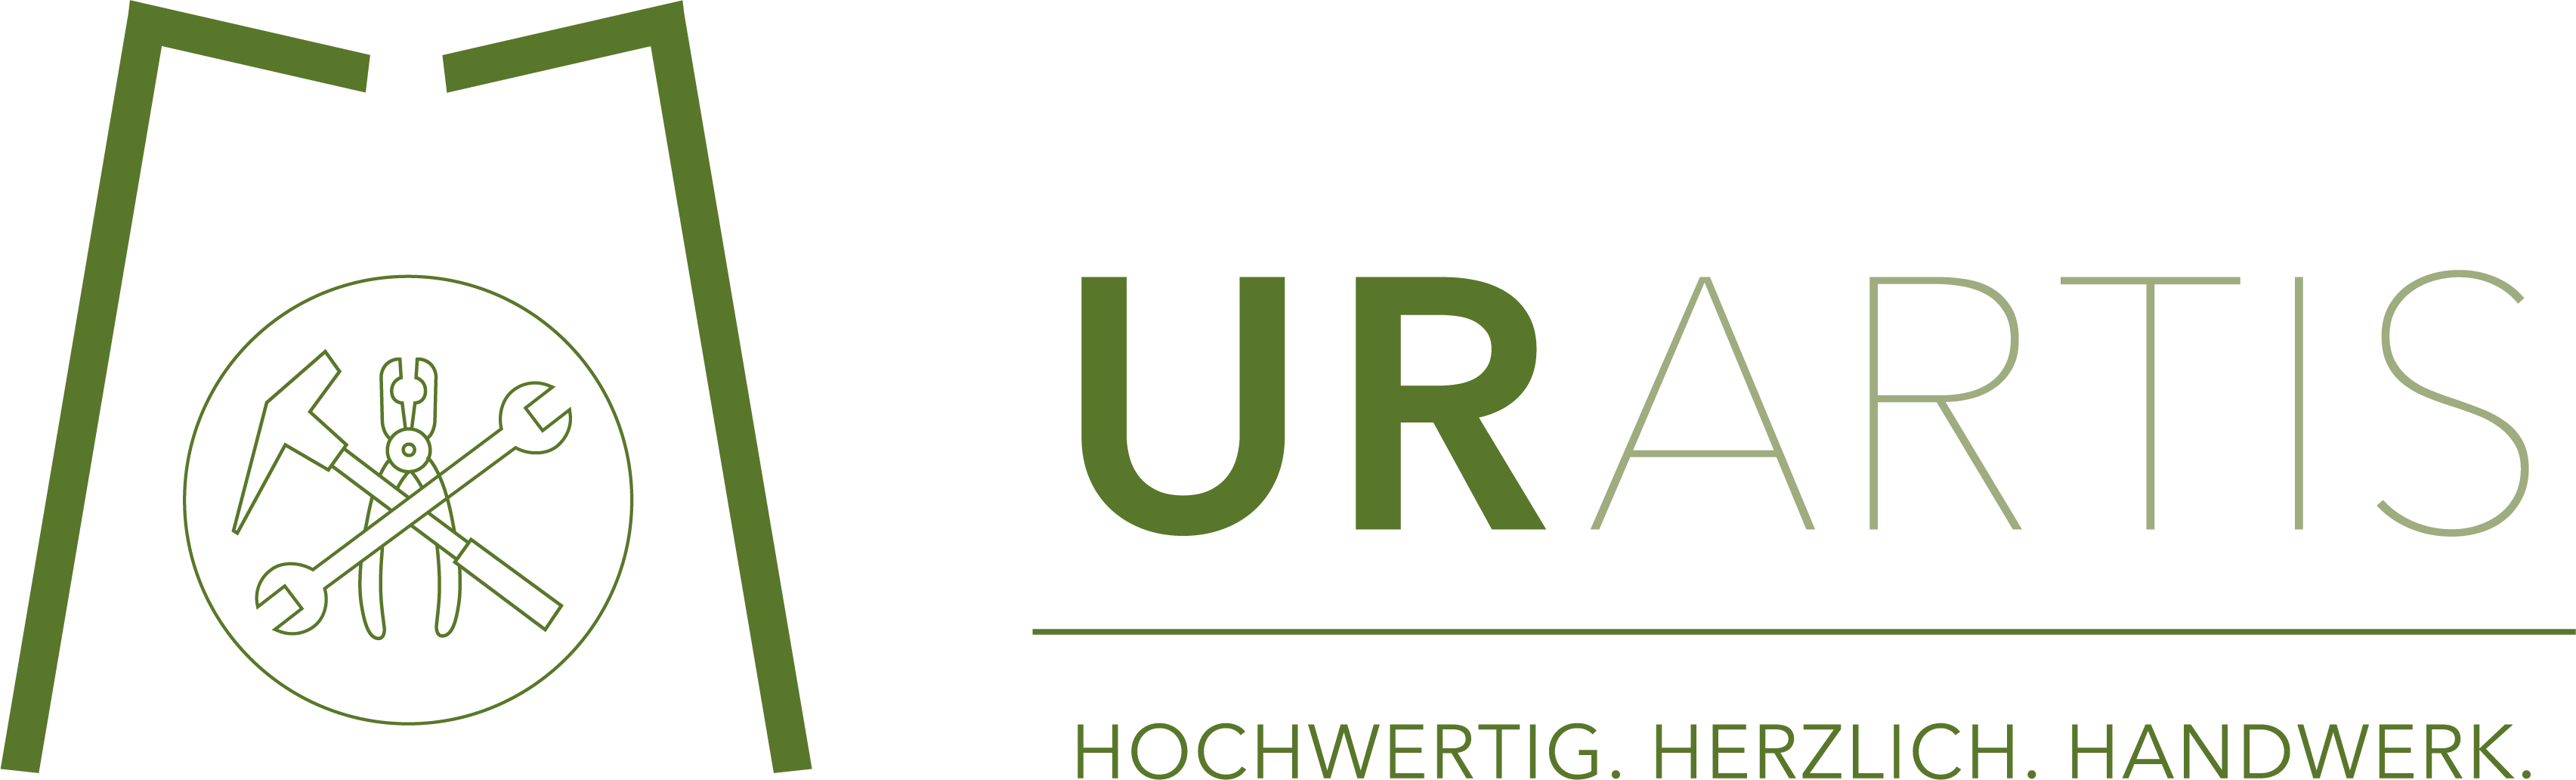 Urartis Logo